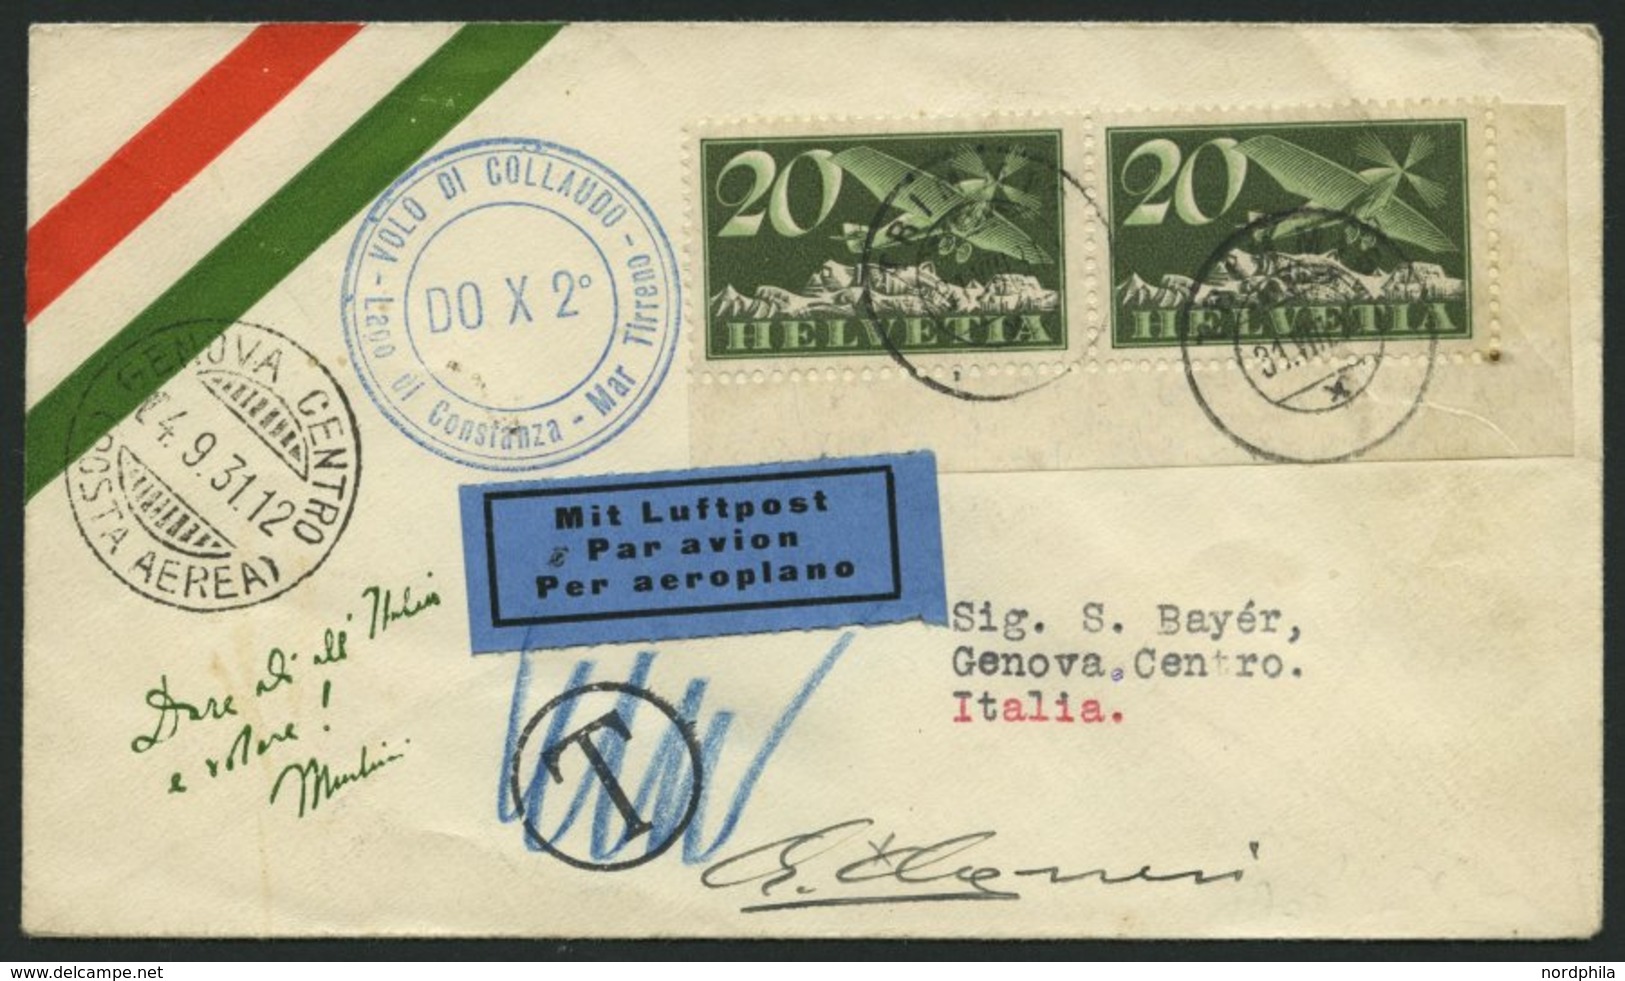 DO-X LUFTPOST DO X2.001.CH BRIEF, 31.08.1931, DO X 2, Postabgabe Trimmis, Blauer Zweikreiser VOLO DI COLLAUDO, Prachtbri - Covers & Documents